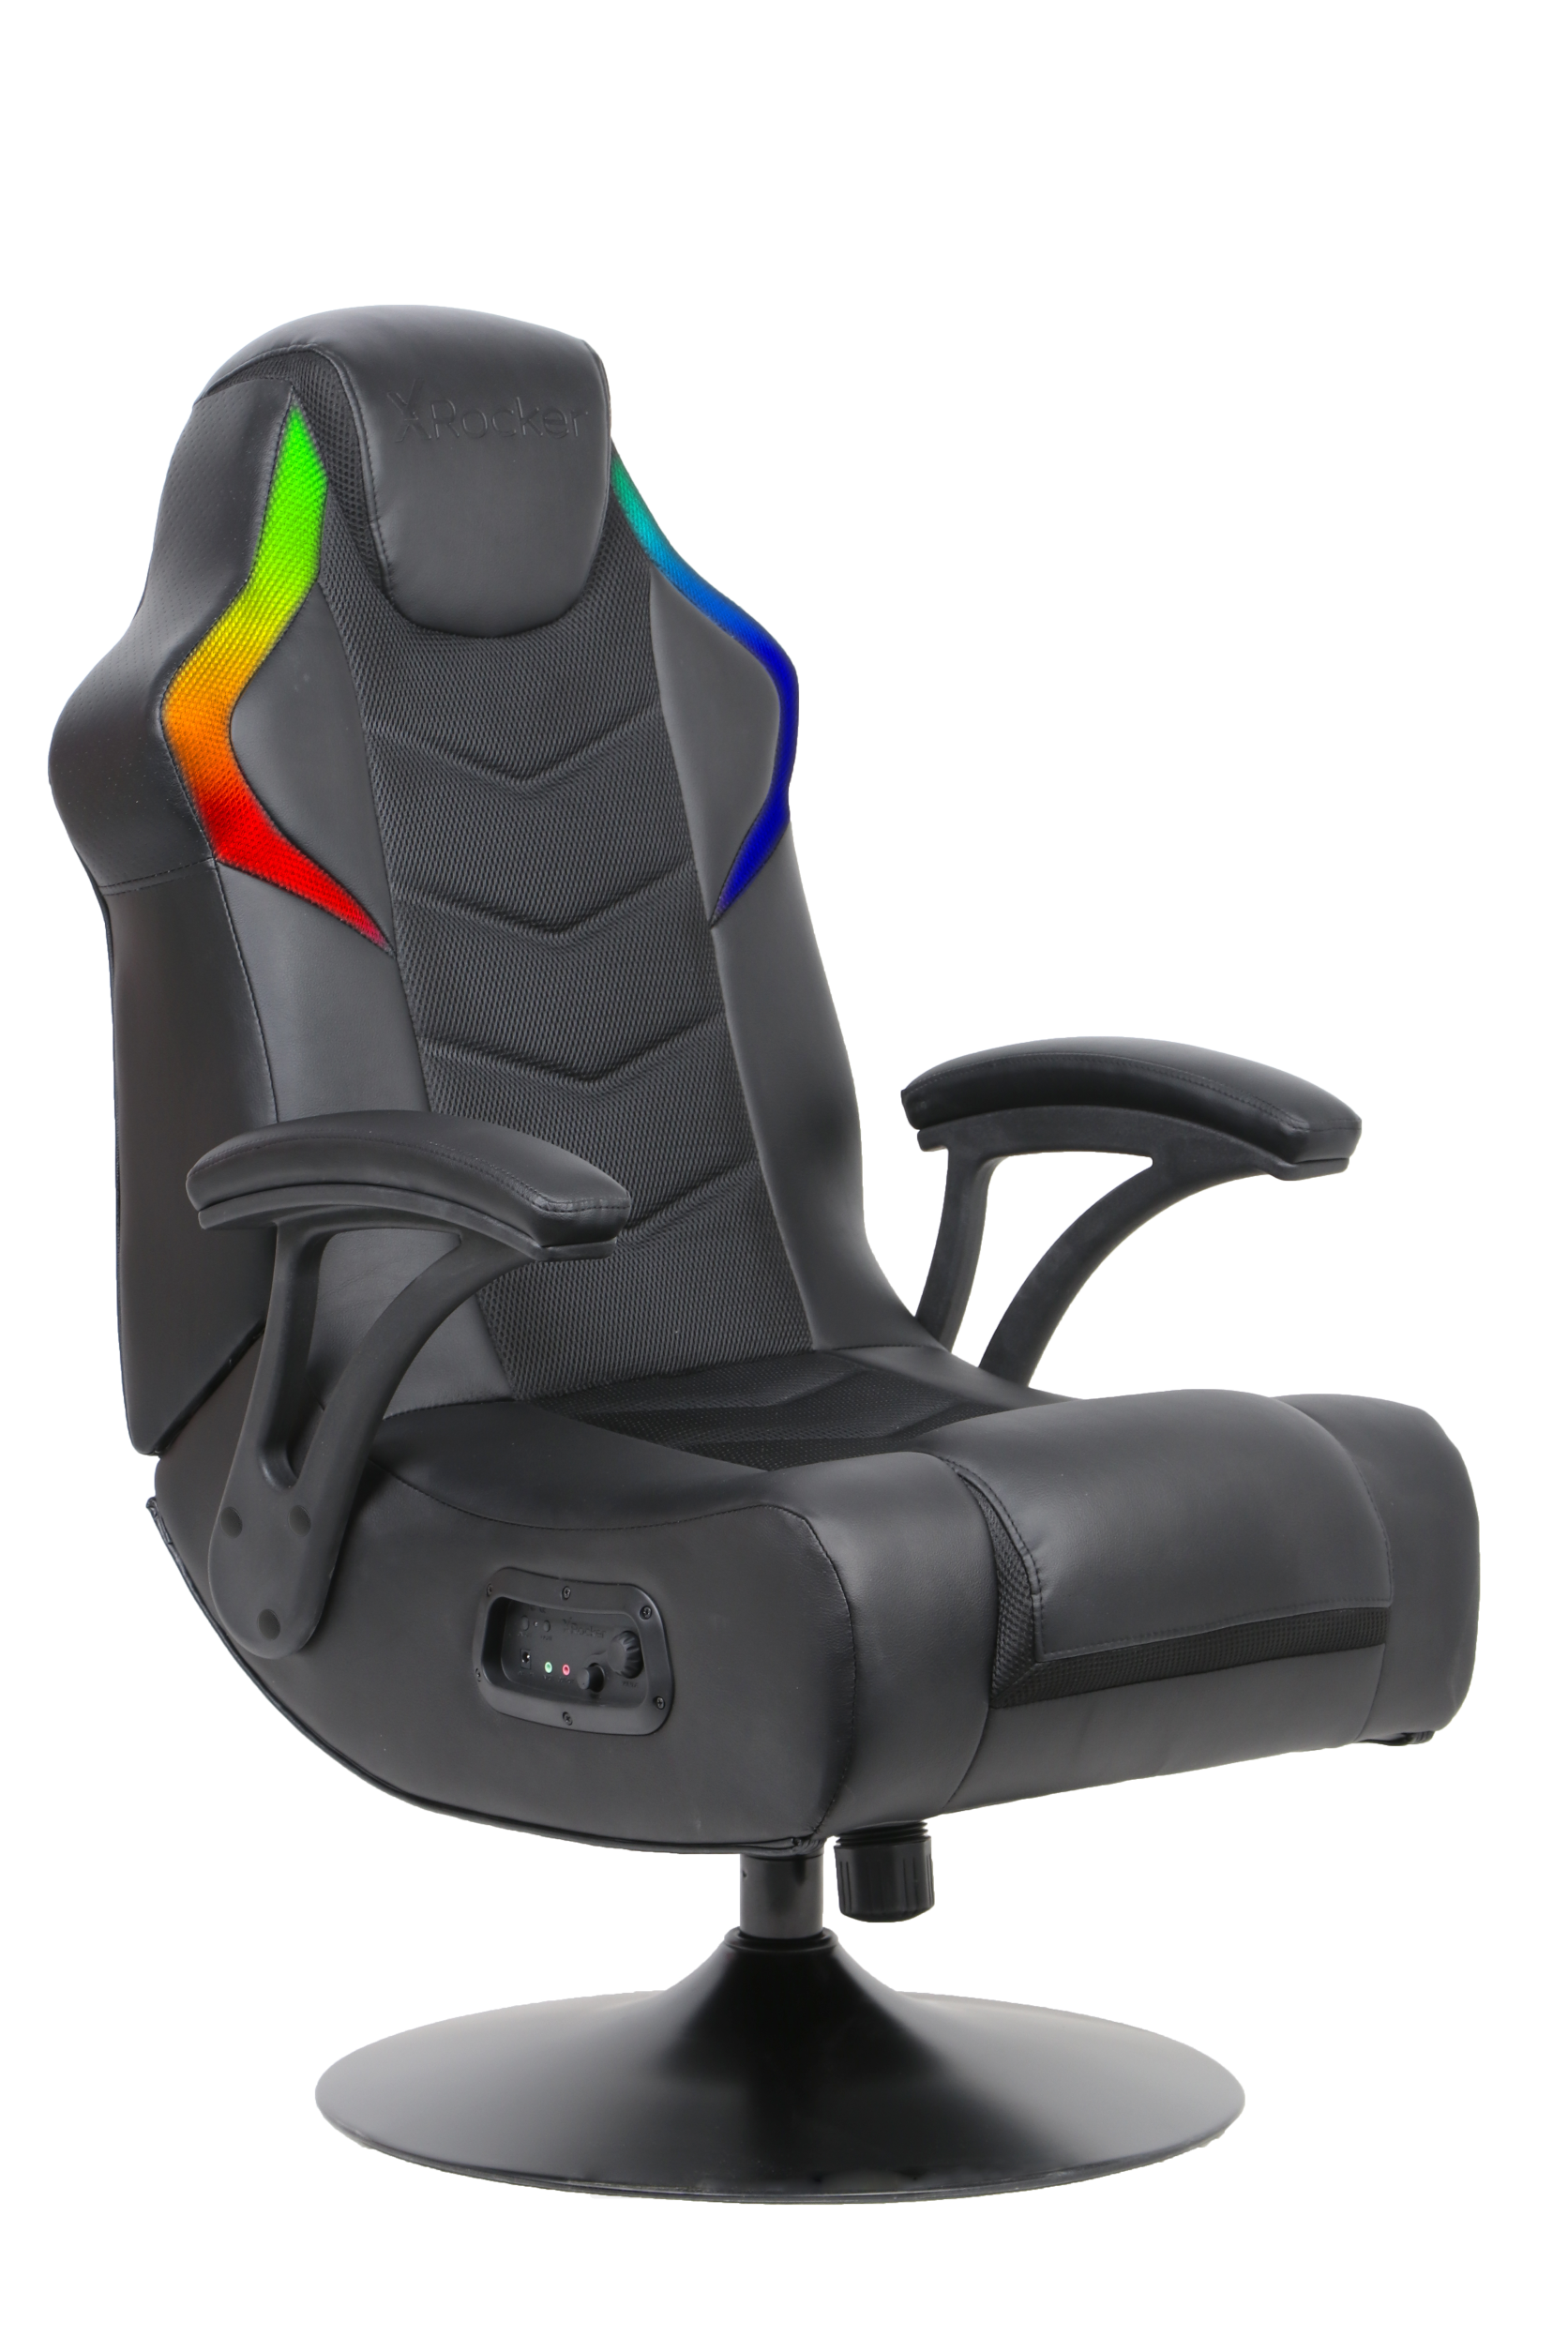 X Rocker Nemesis RGB Audio Gaming Pedestal Console Chair, Black, 32.7 x 25.8 x 40.2 - image 1 of 9